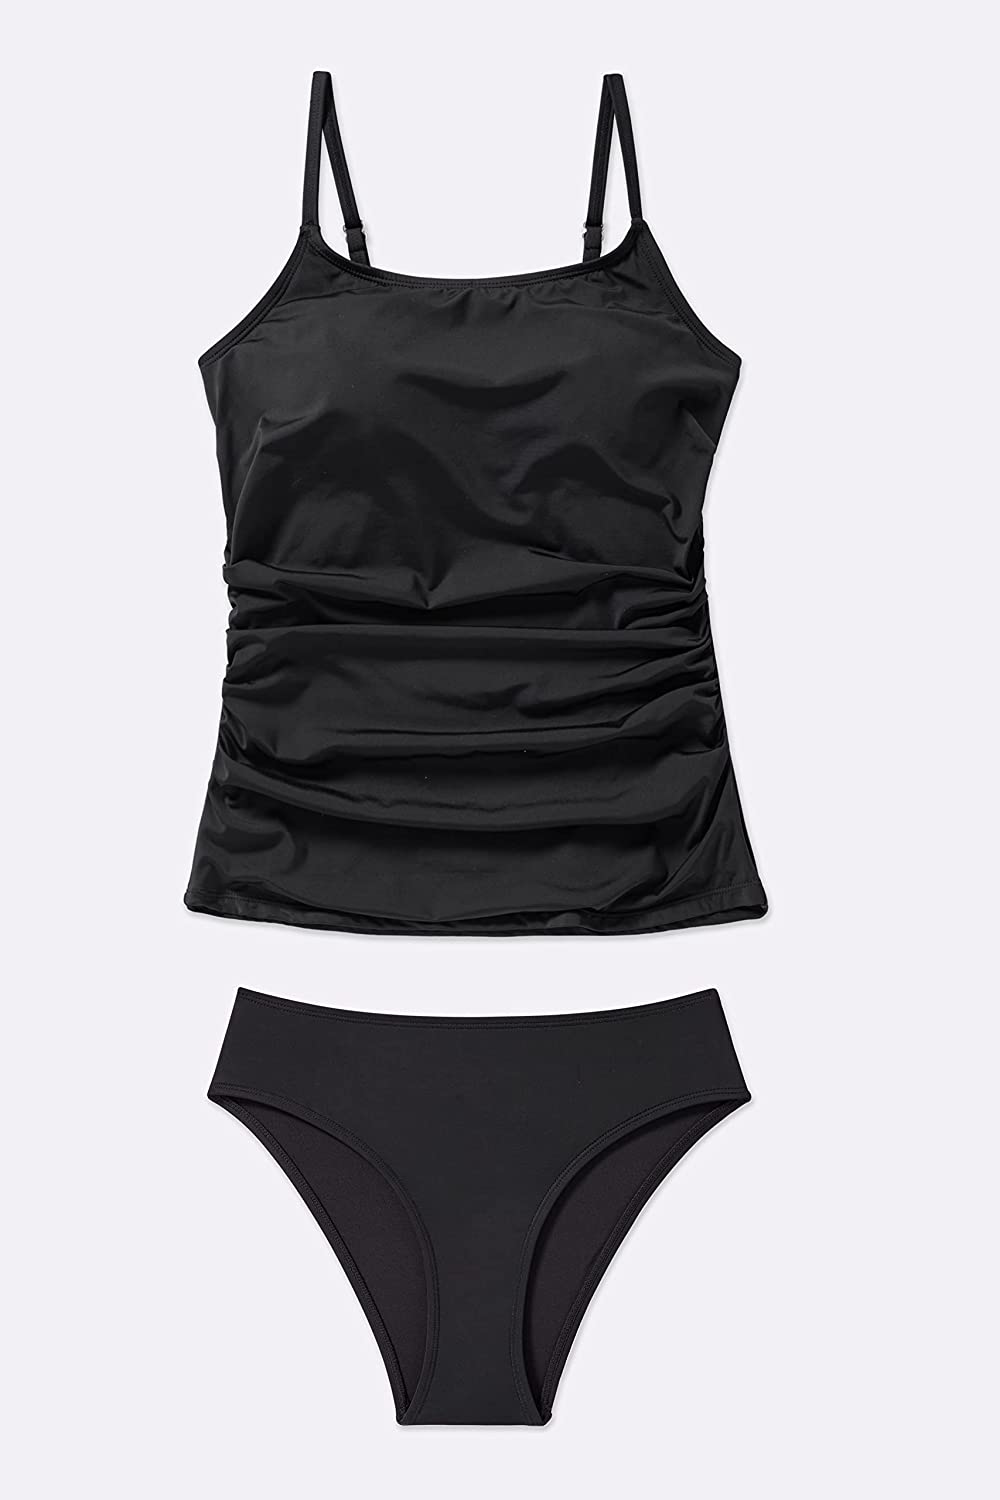 Beautikini Women's Tankini Swimsuits Two Piece Bathing Suits for Woman Printed Swimwear Top with Bikini Bottom